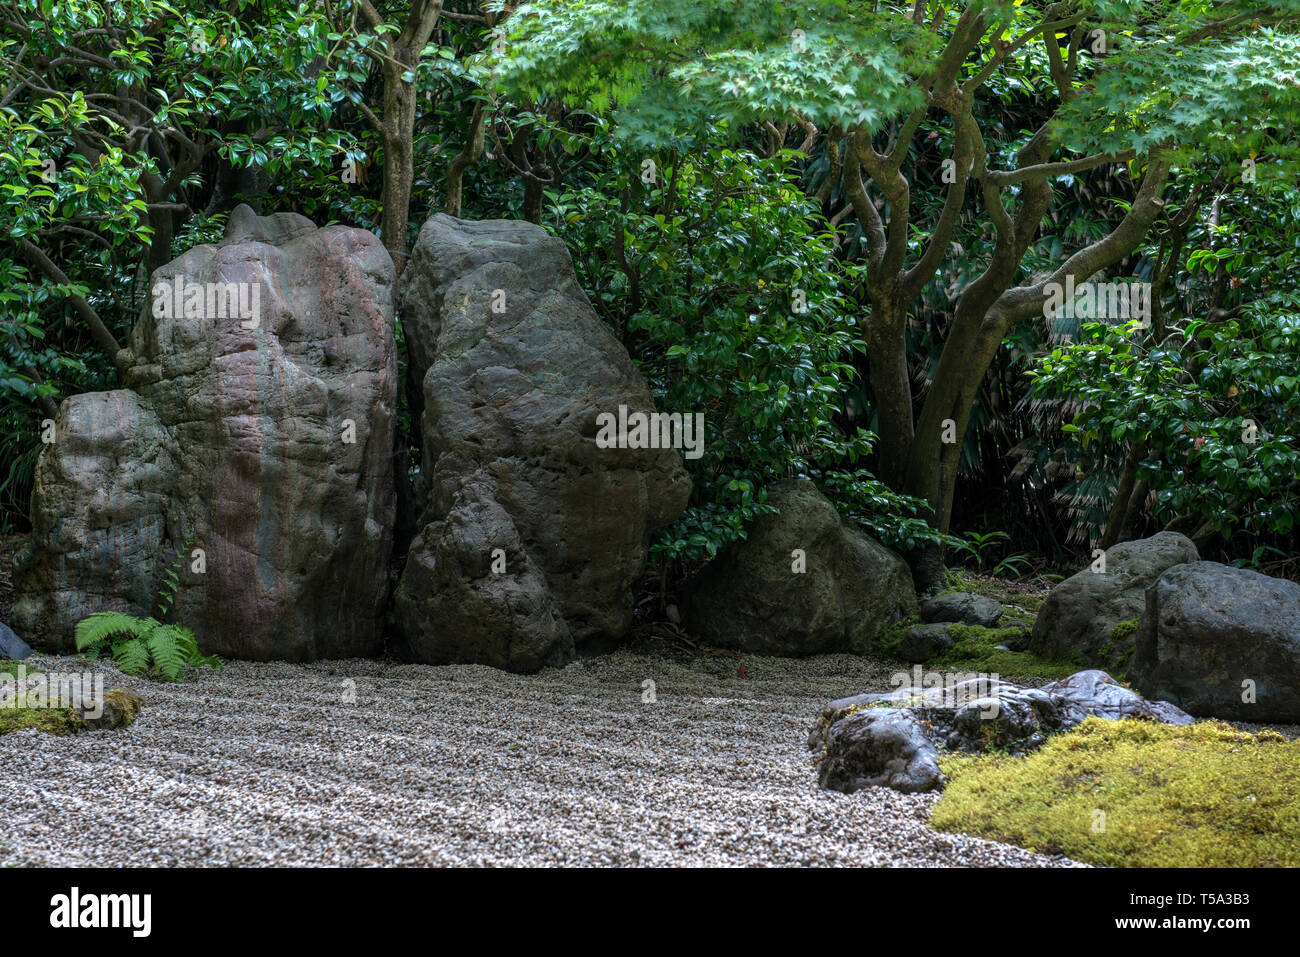 Zen Garden with stone in the Japanese Tea Garden located in Golden Gate Park, San Francisco California. Stock Photo